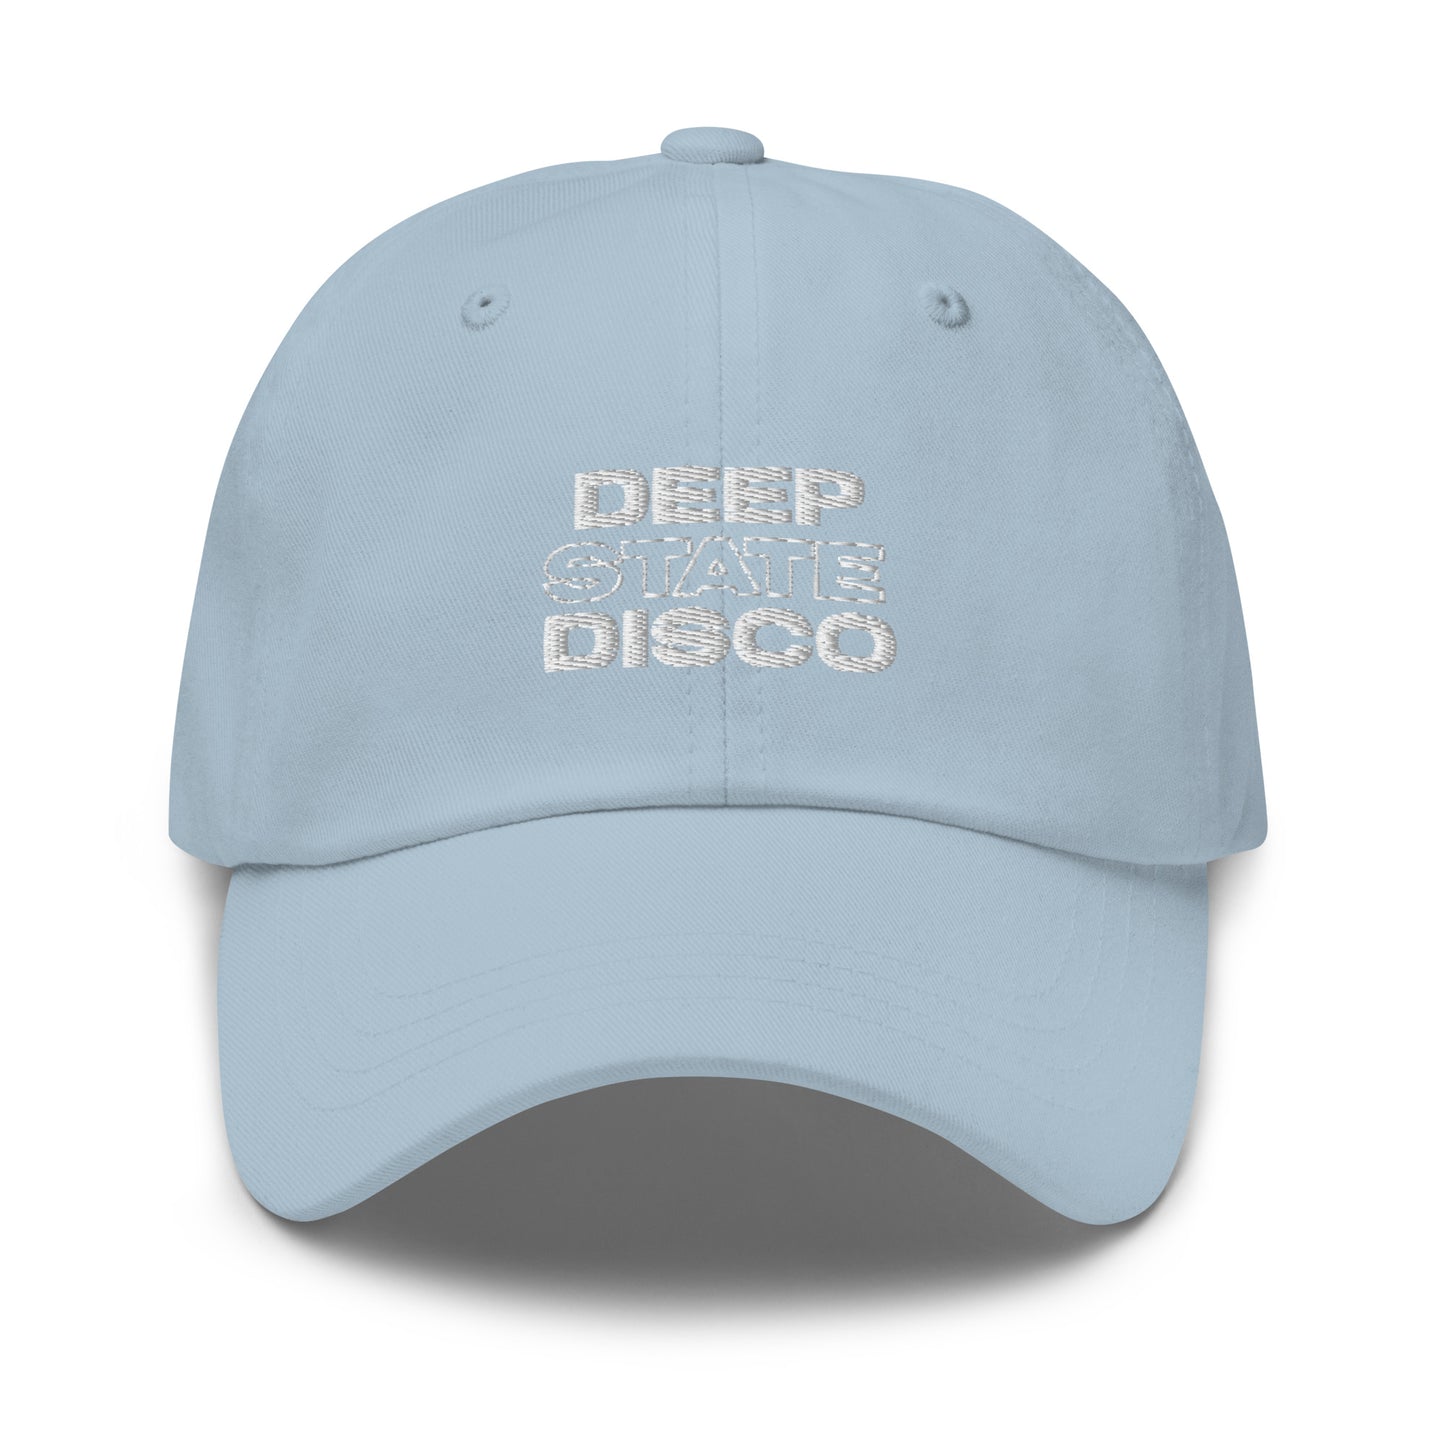 Deep State Dad hat